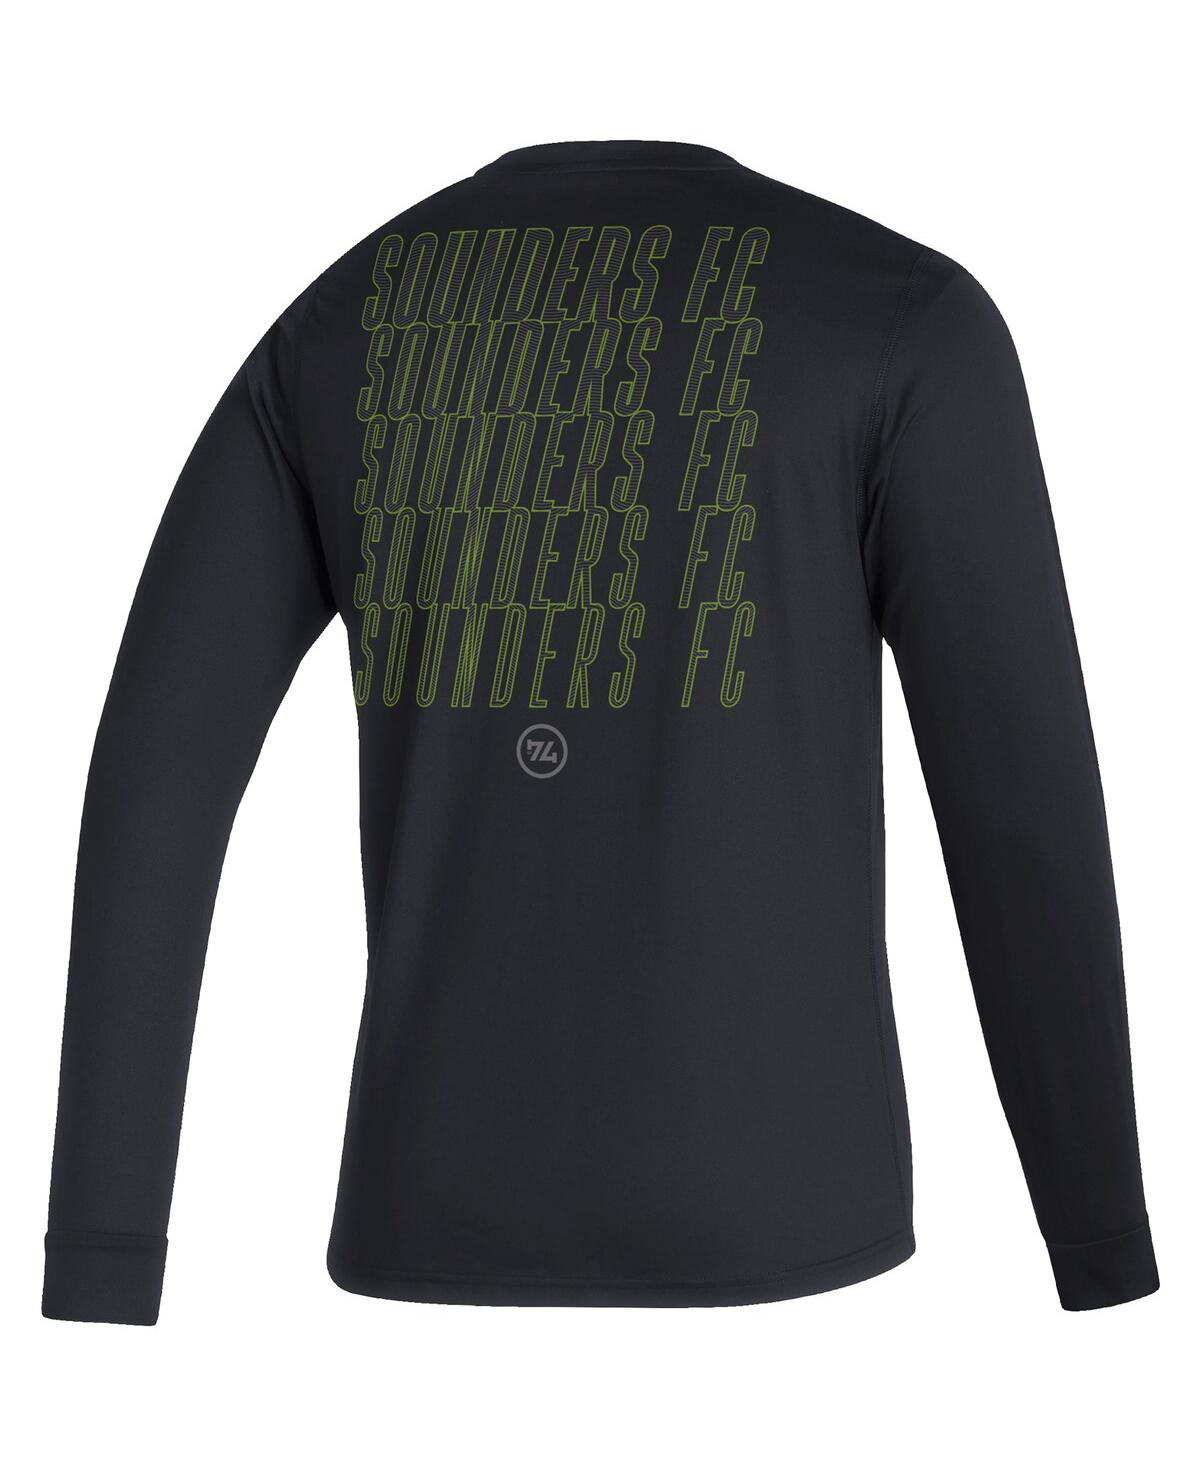 Shop Adidas Originals Men's Adidas Black Seattle Sounders Fc Club Long Sleeve T-shirt